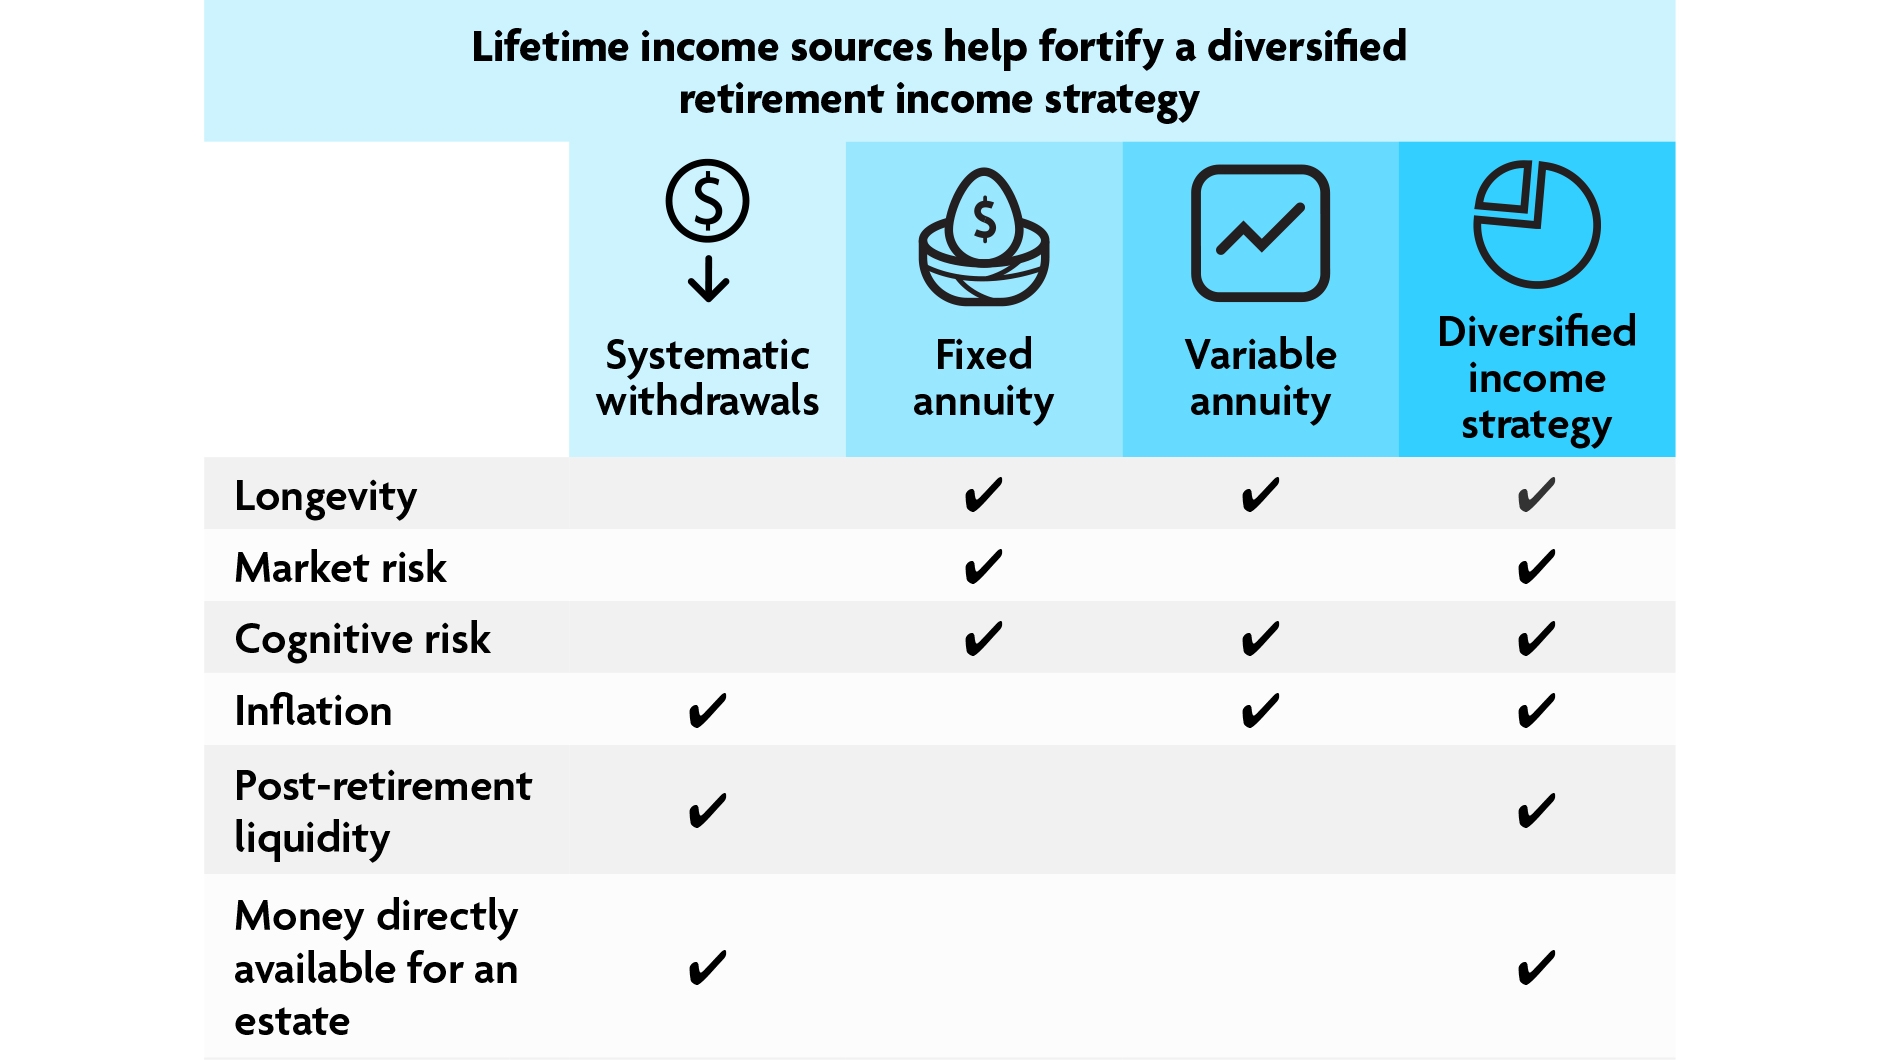 Lifetime income sources help